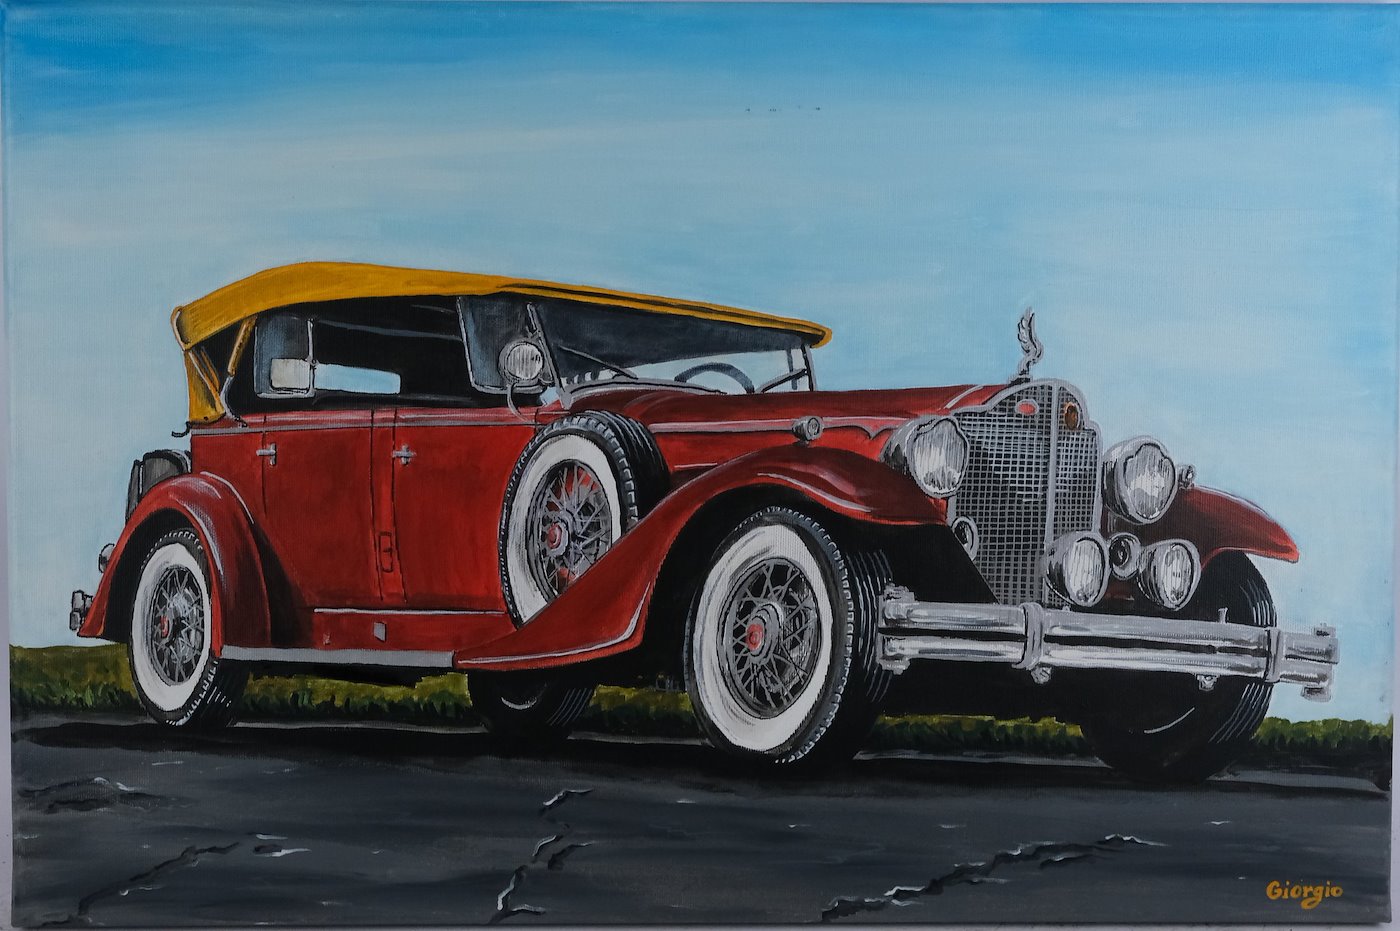 Giorgio - 1933 Packard Luxury